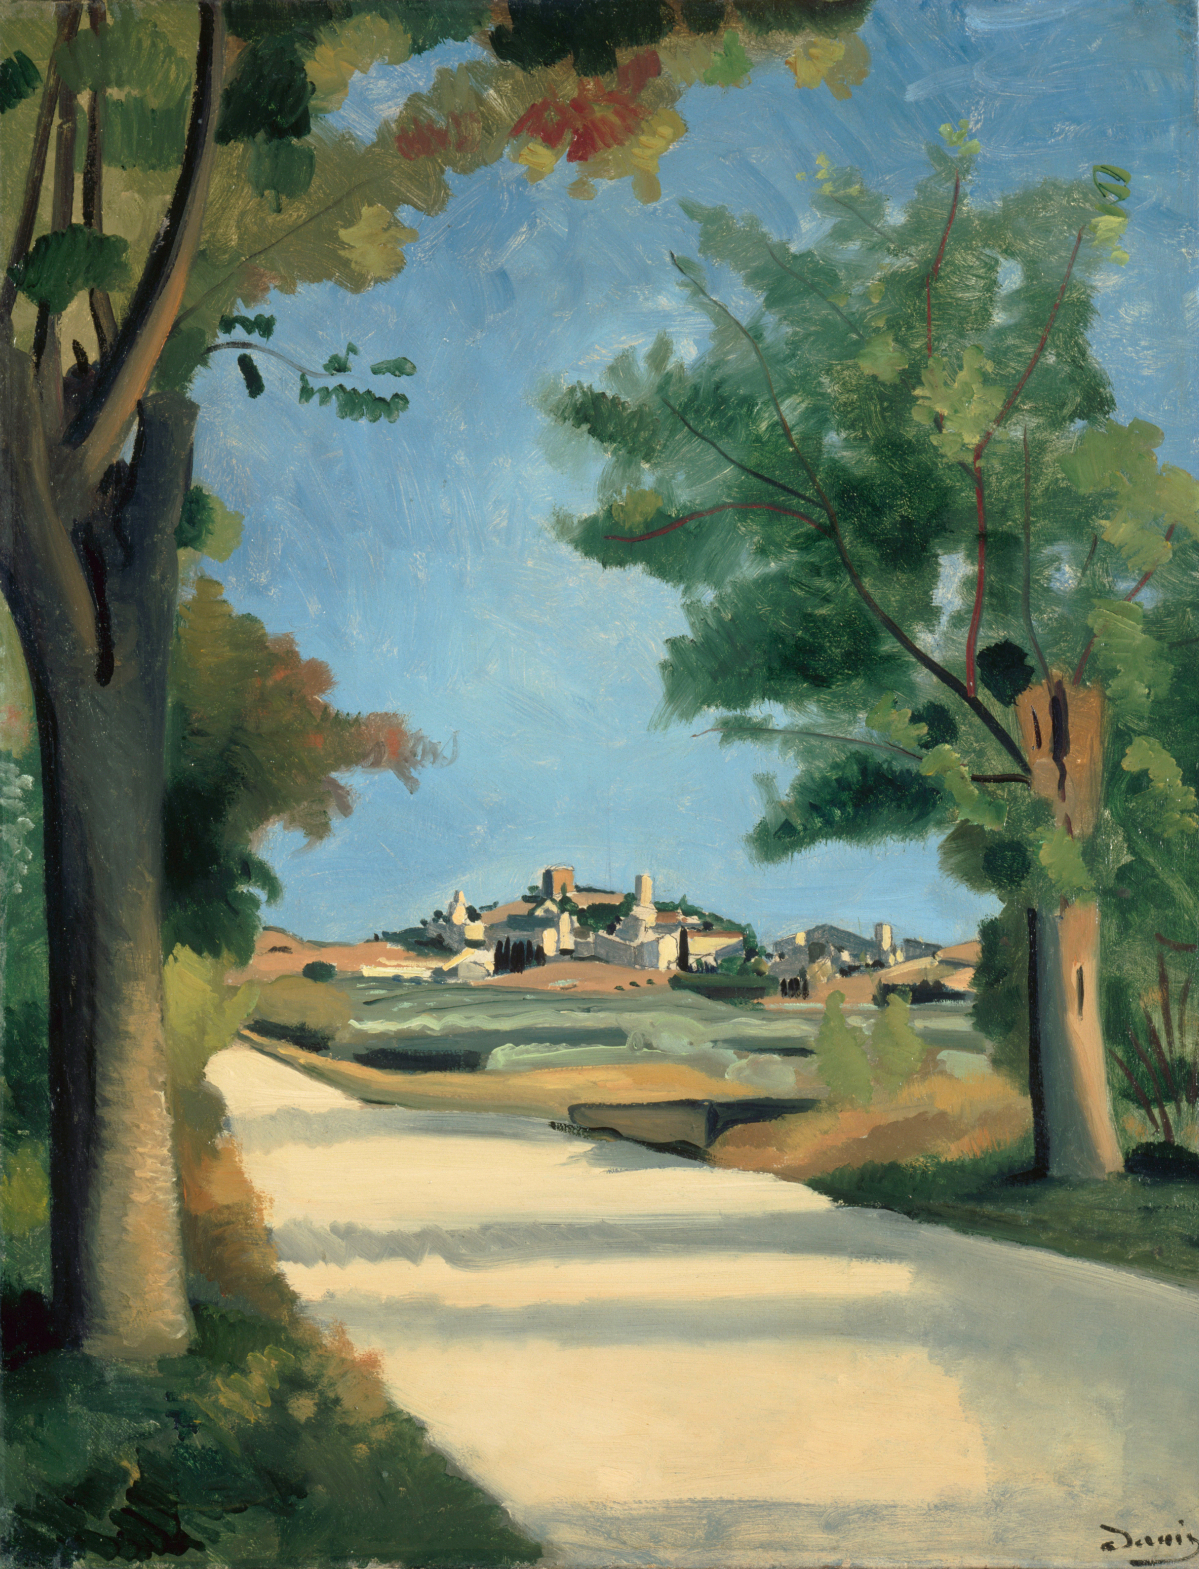 Andre Derain, The road, in 1932, oil on canvas, H.65; W. 50 cm with frame H. 88; L. 74 cm, © RMN-Grand Palais (Orangerie Museum) / Hervé Lewandowski